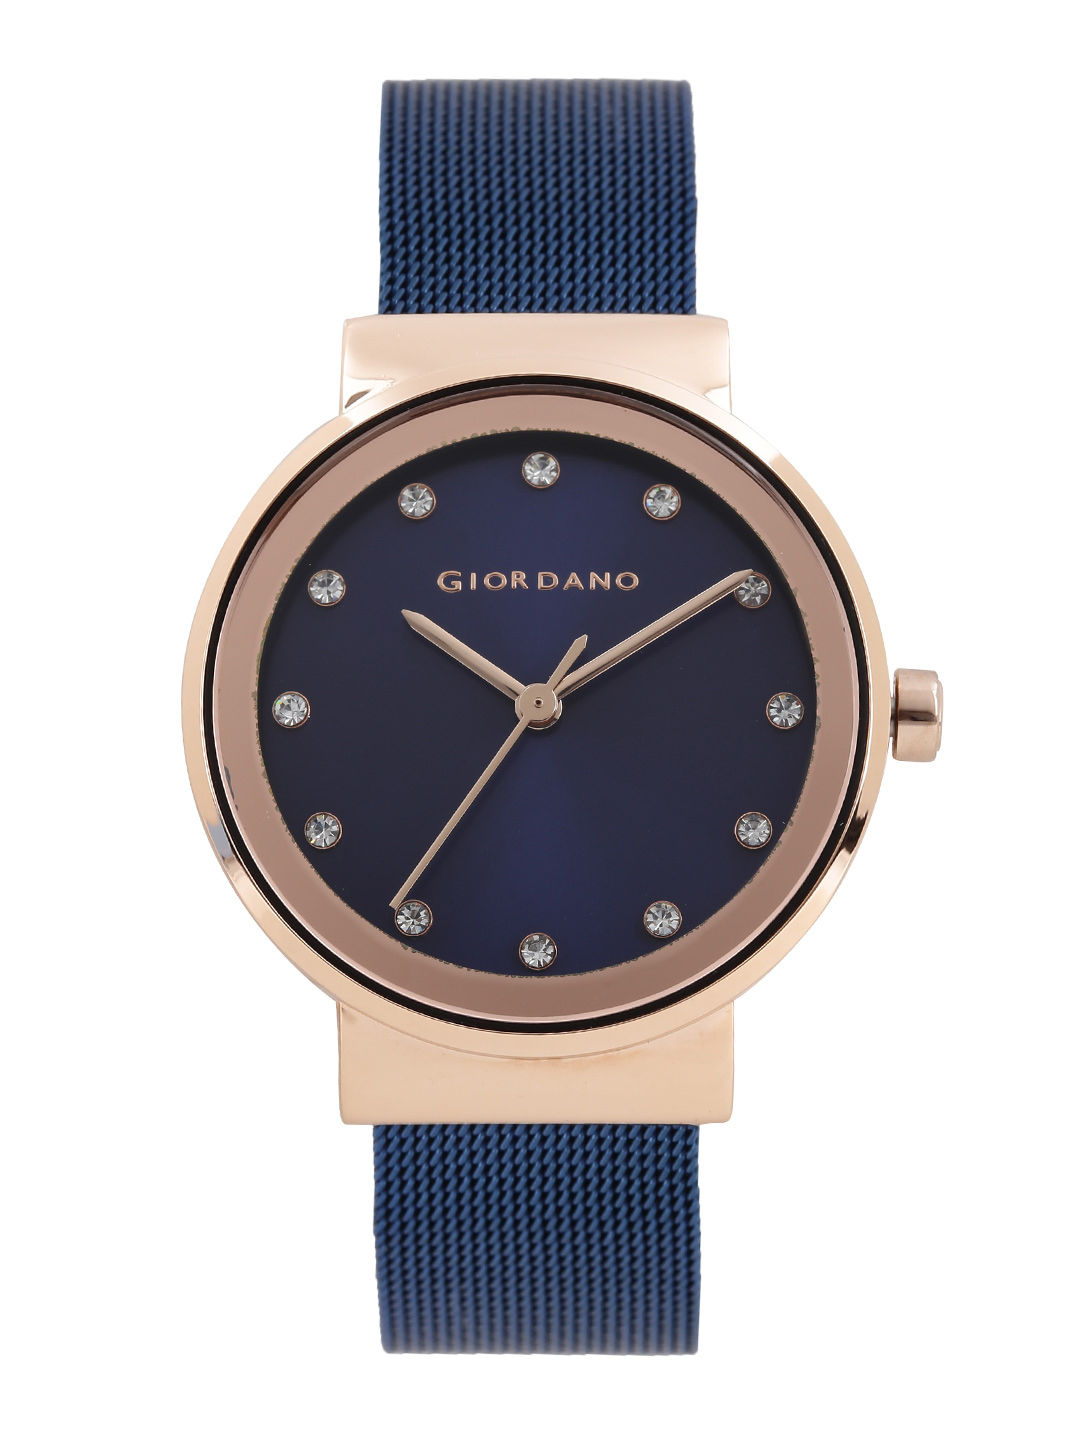 Giordano Analog Blue Dial Women's Watch (A2047-66)